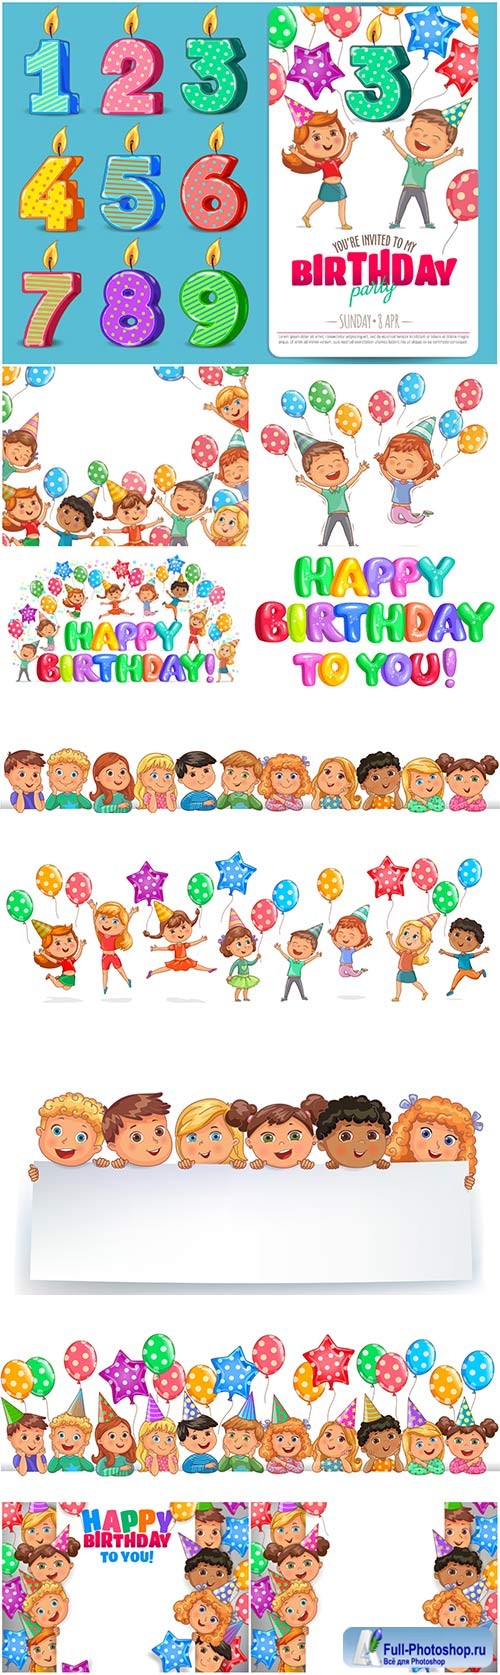 Happy birthday vector illustration, funny kids